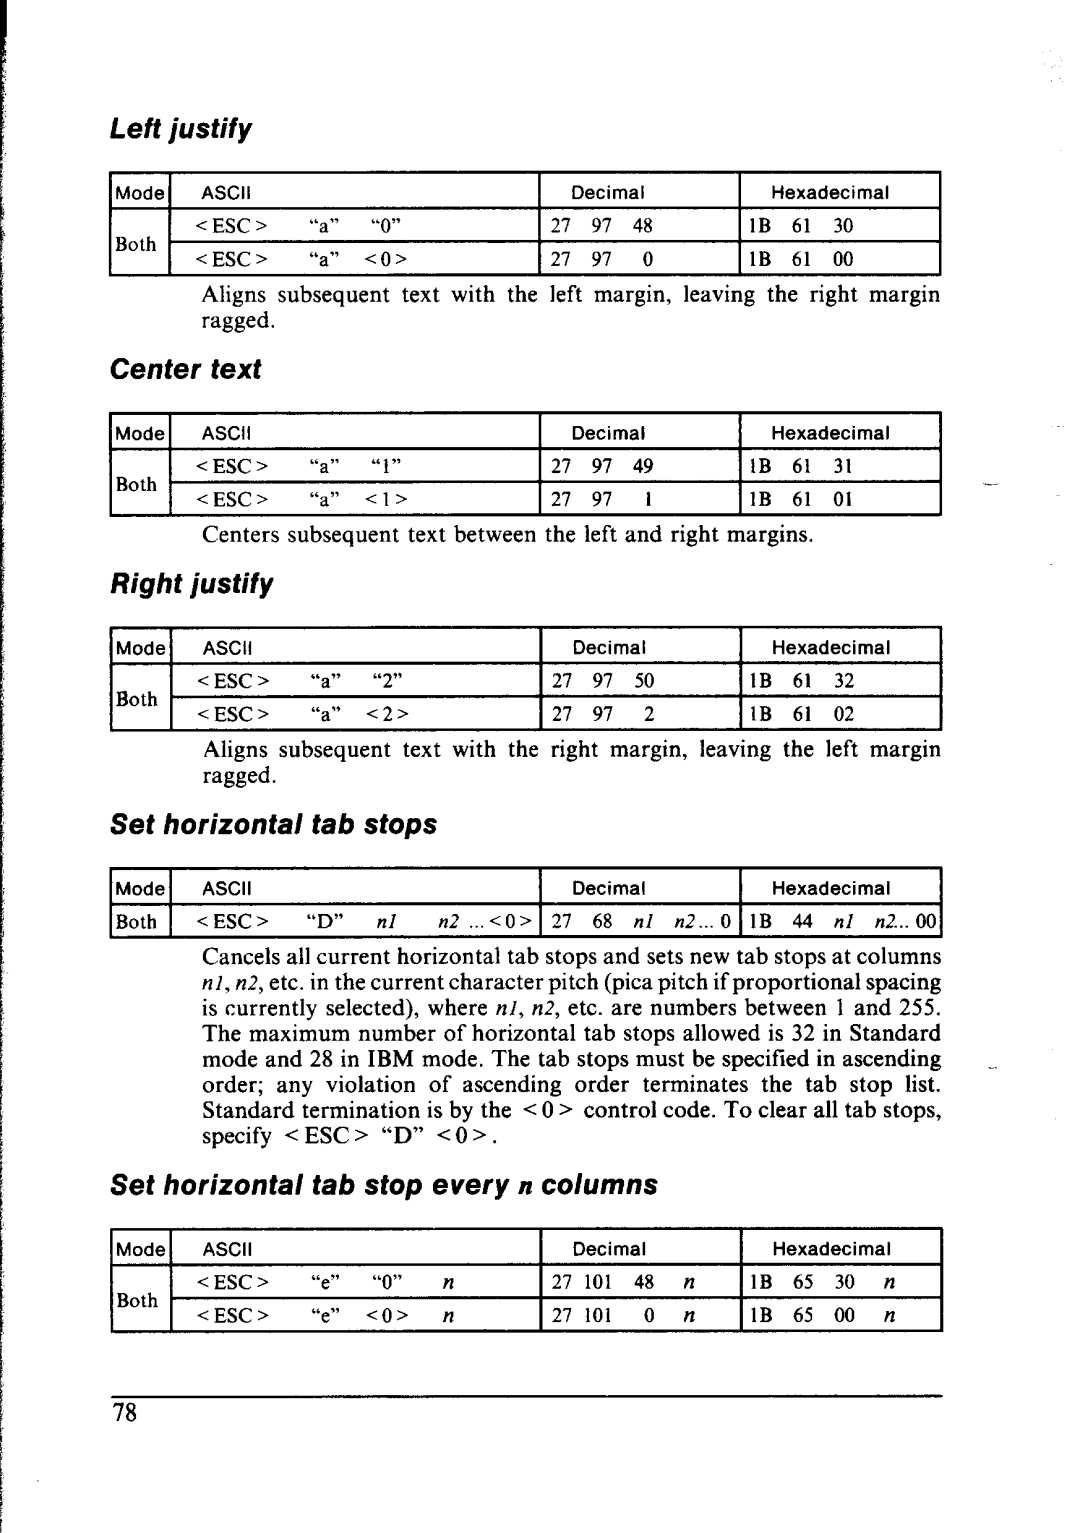 Star Micronics NX-1000 Right justify, Set horizontal tab stop every n columns, Left, Center text, Set horizonfal tab stops 